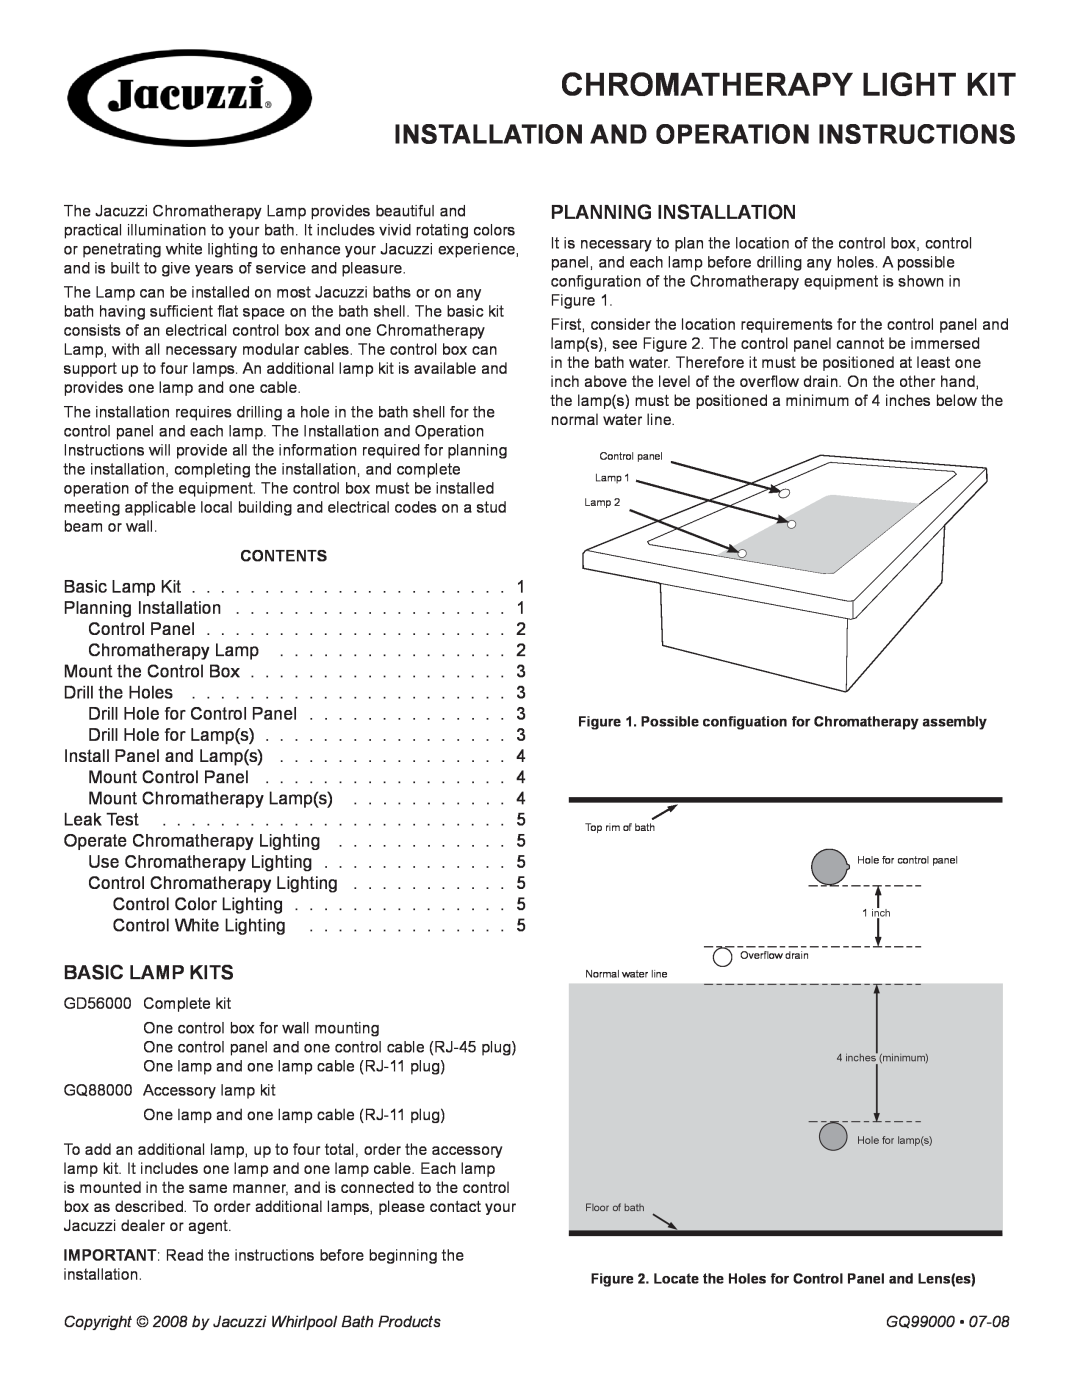 Jacuzzi GQ99000 manual Basic lamp KitS, Planning Installation, Chromatherapy Light Kit 